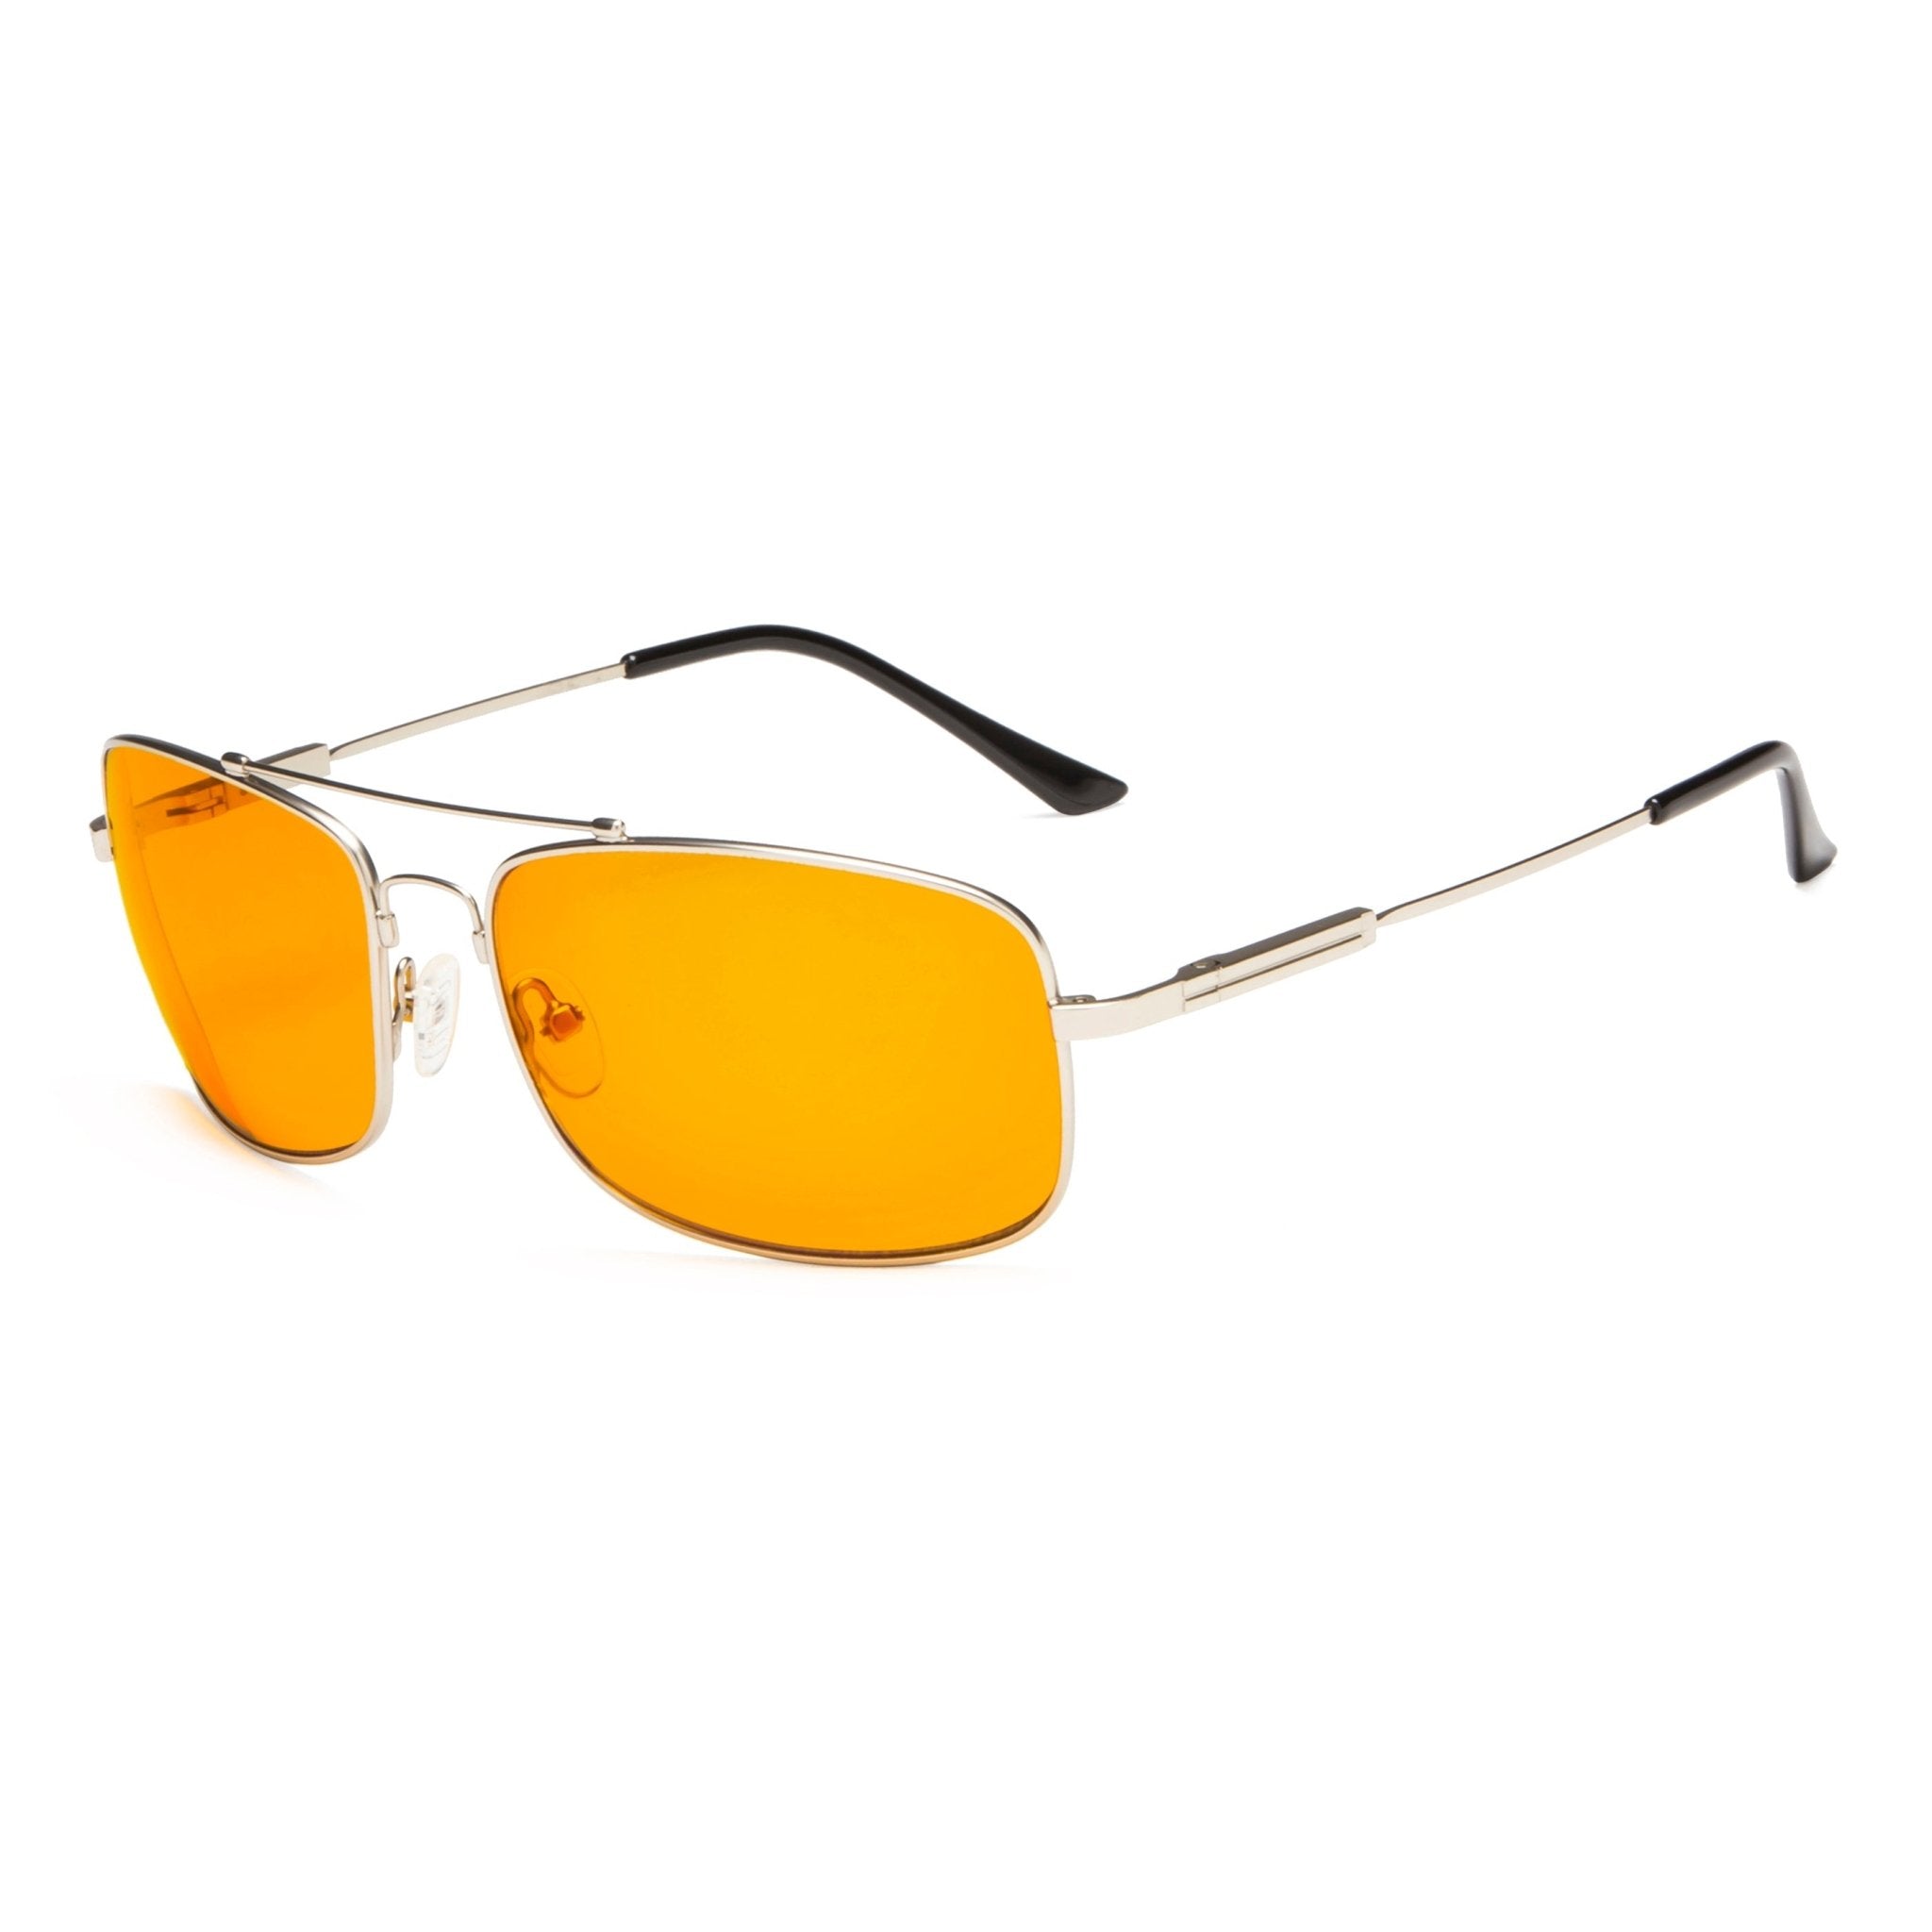 Buy VILEN RAY Black Shade Retro Rectangular Aviator Sunglasses Premium  Glass Lens Flat Metal Sun Glasses Men Women at Amazon.in